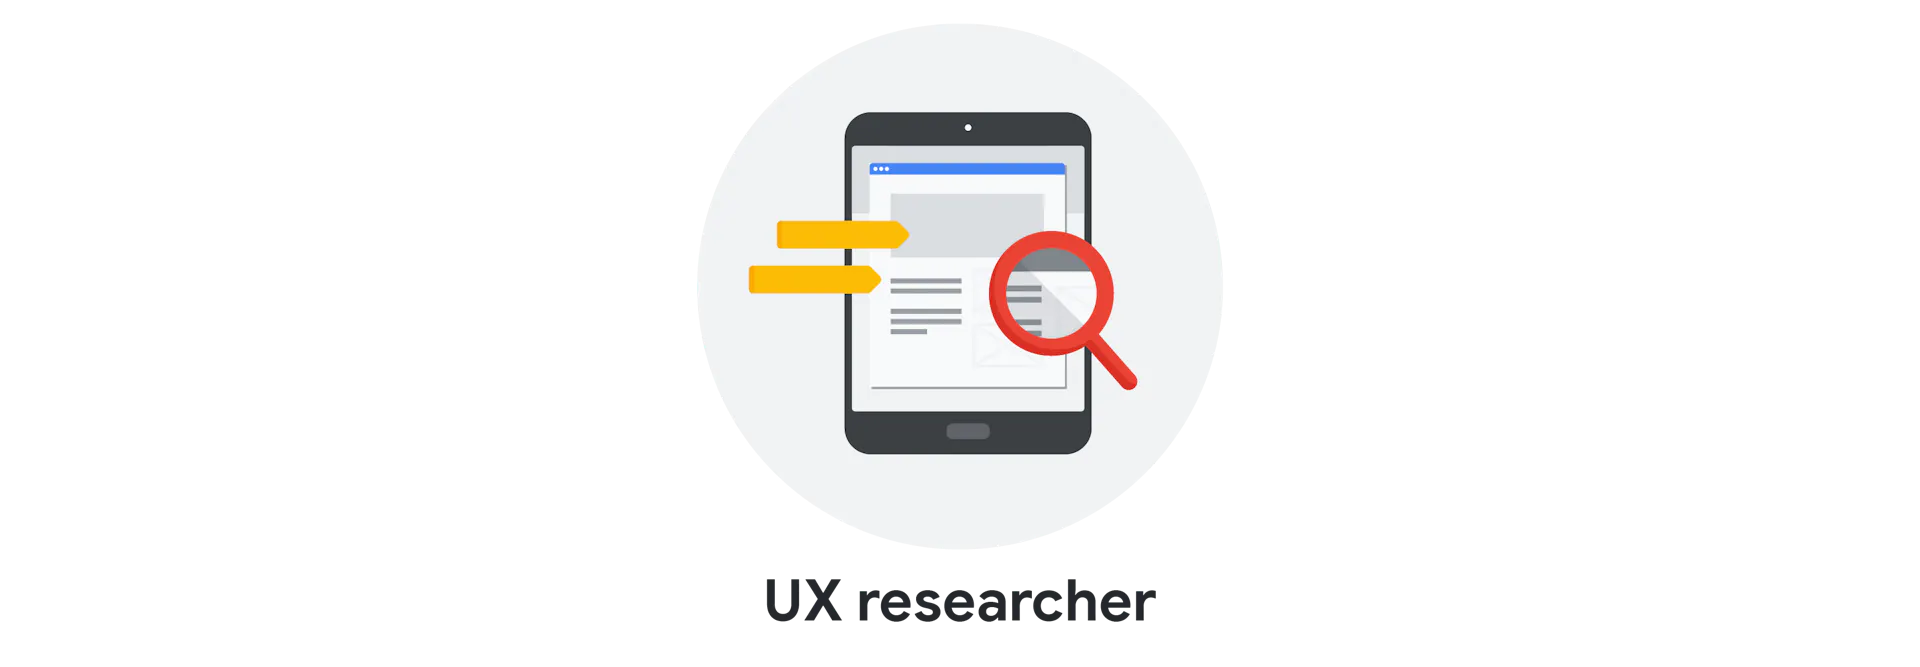 UX researcher